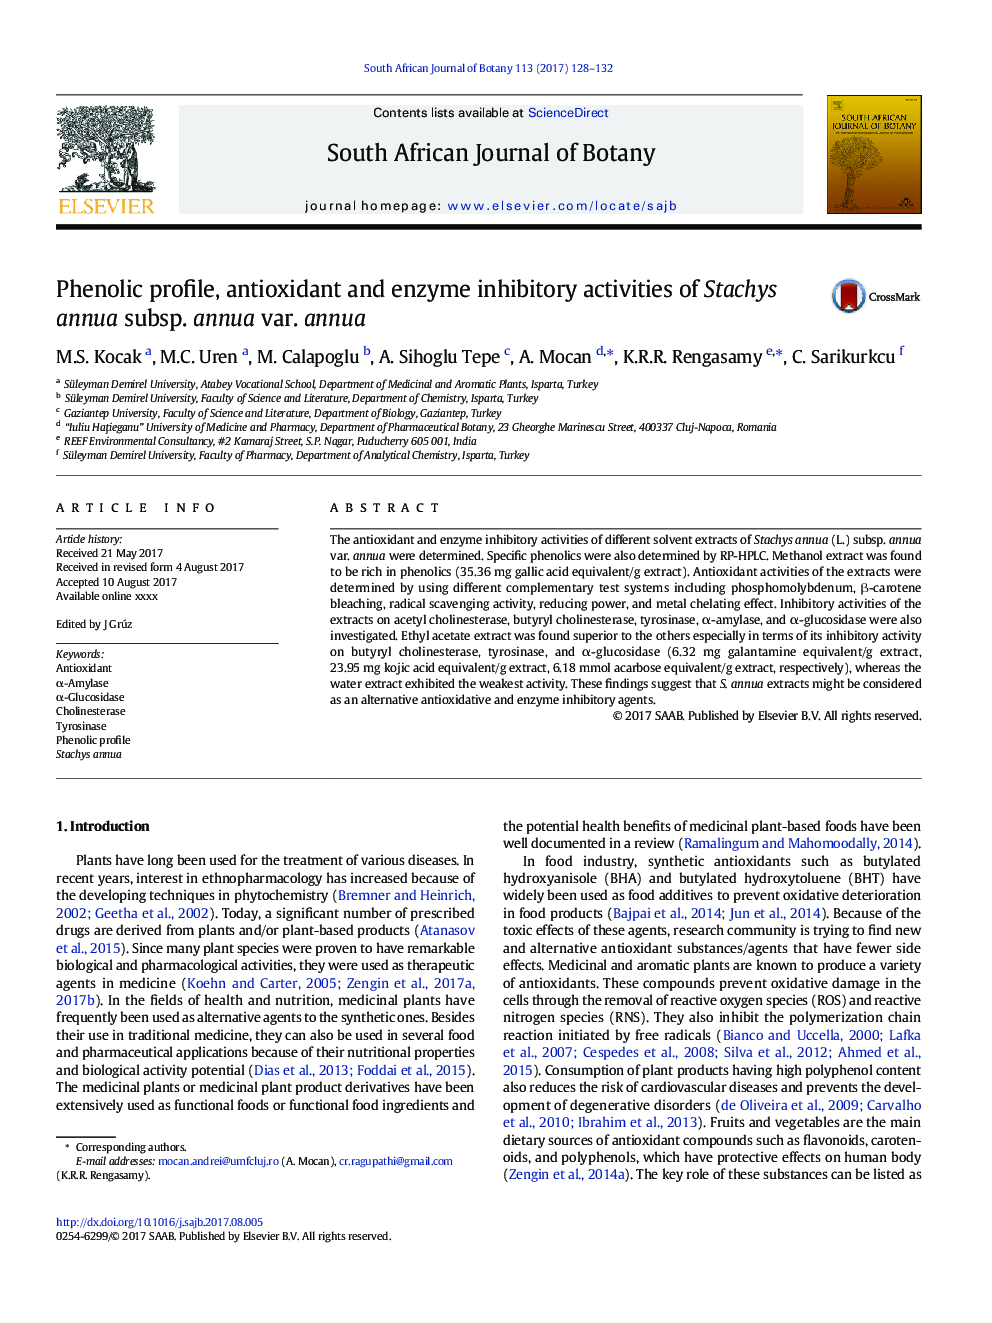 Phenolic profile, antioxidant and enzyme inhibitory activities of Stachys annua subsp. annua var. annua